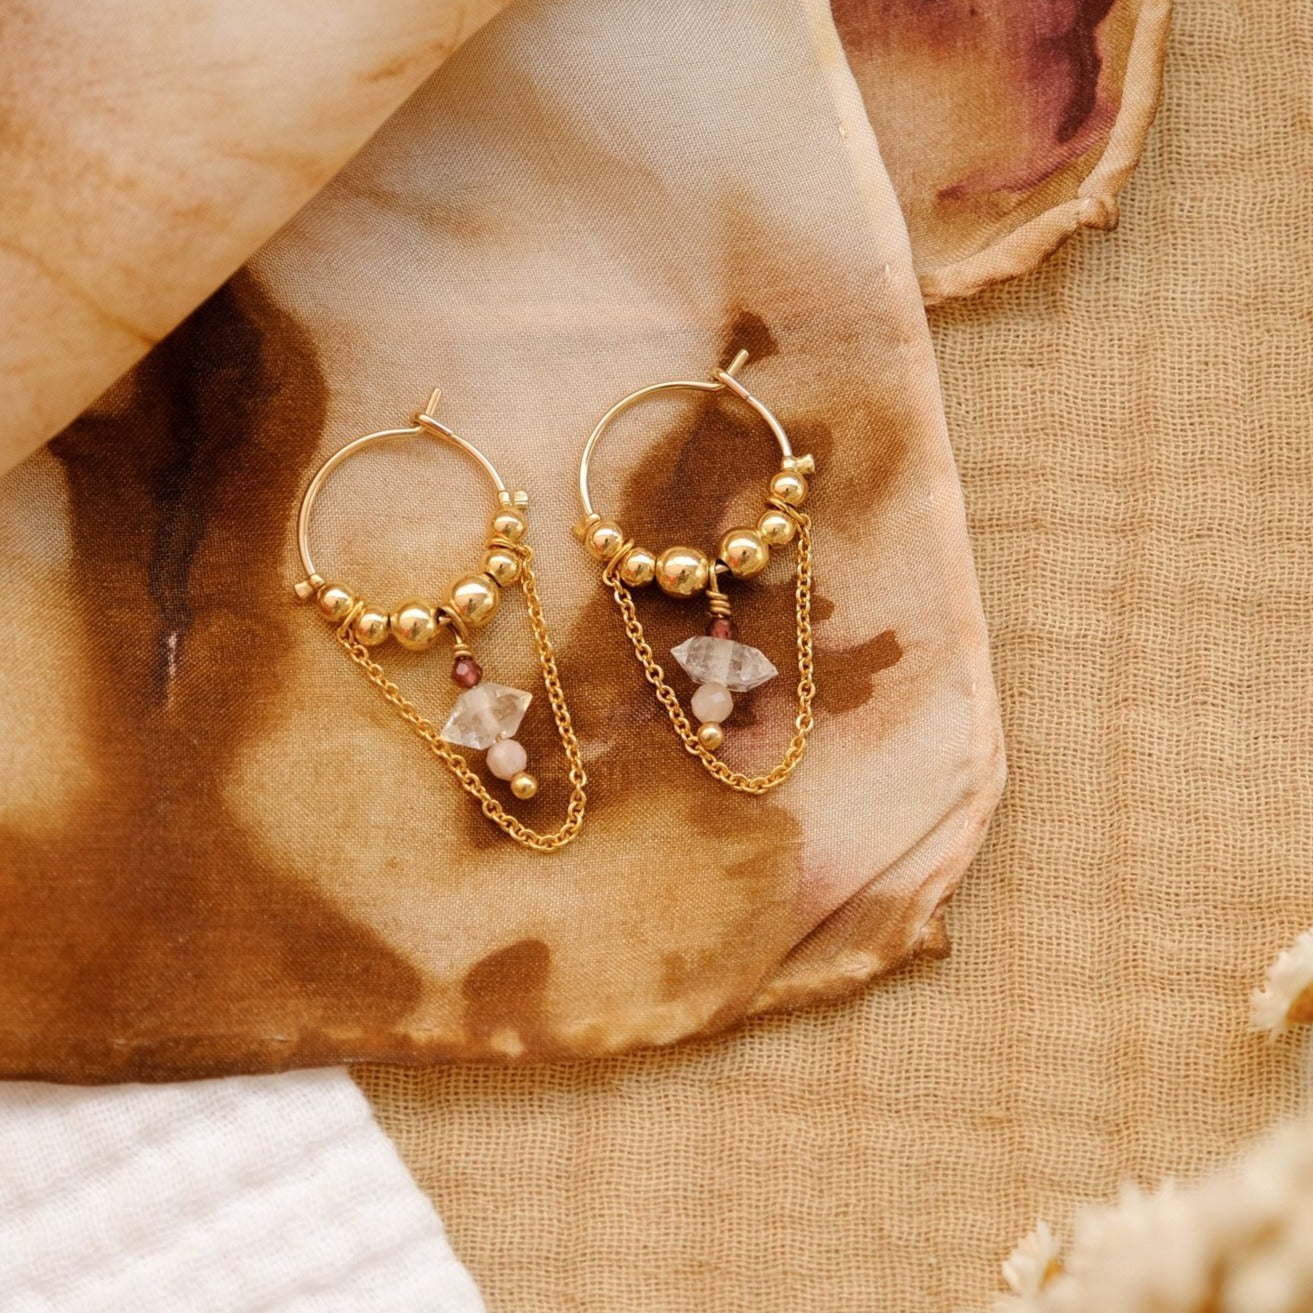 “Aster” earrings